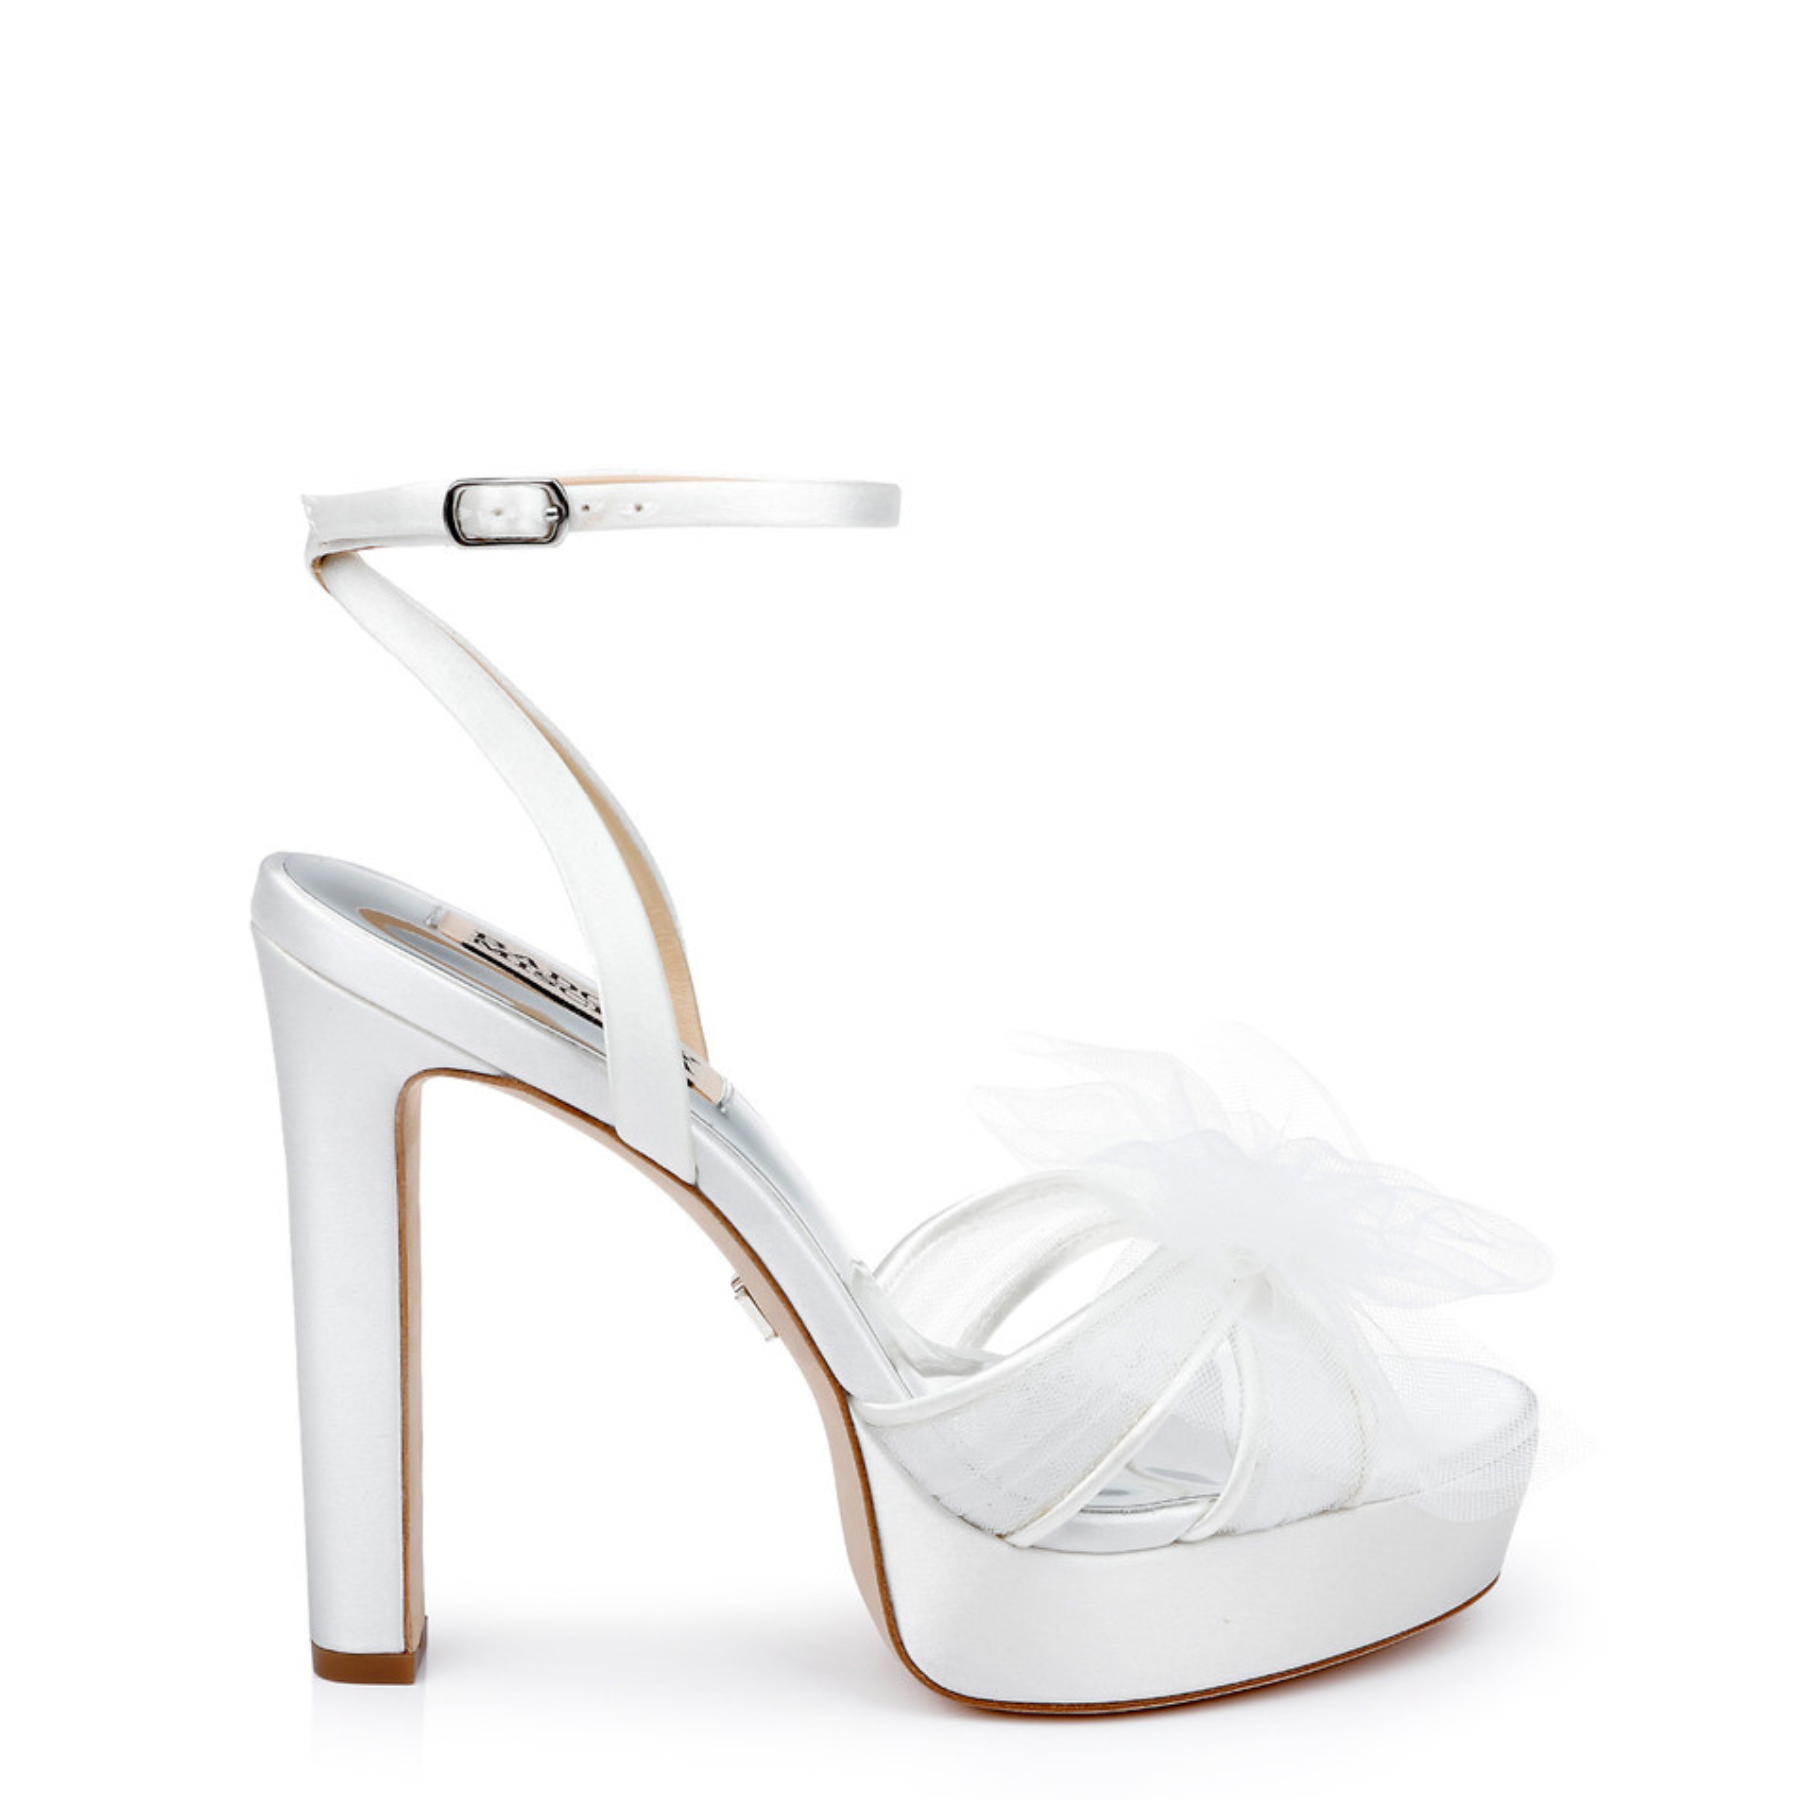 Karen Millen shoes peep toe whites greys floral butterfly size 5